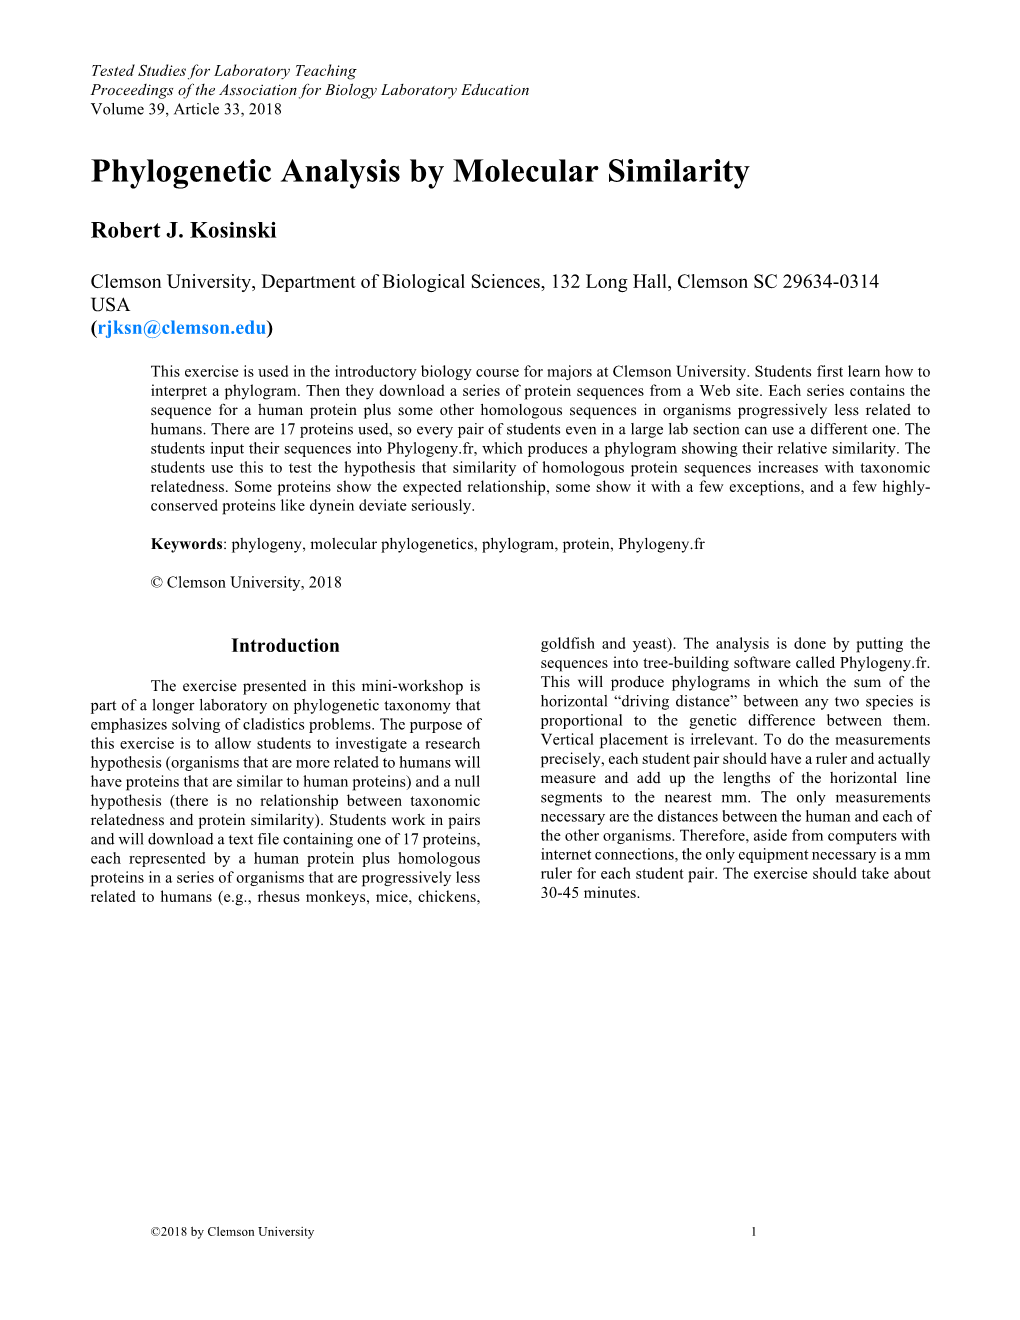 Phylogenetic Analysis by Molecular Similarity